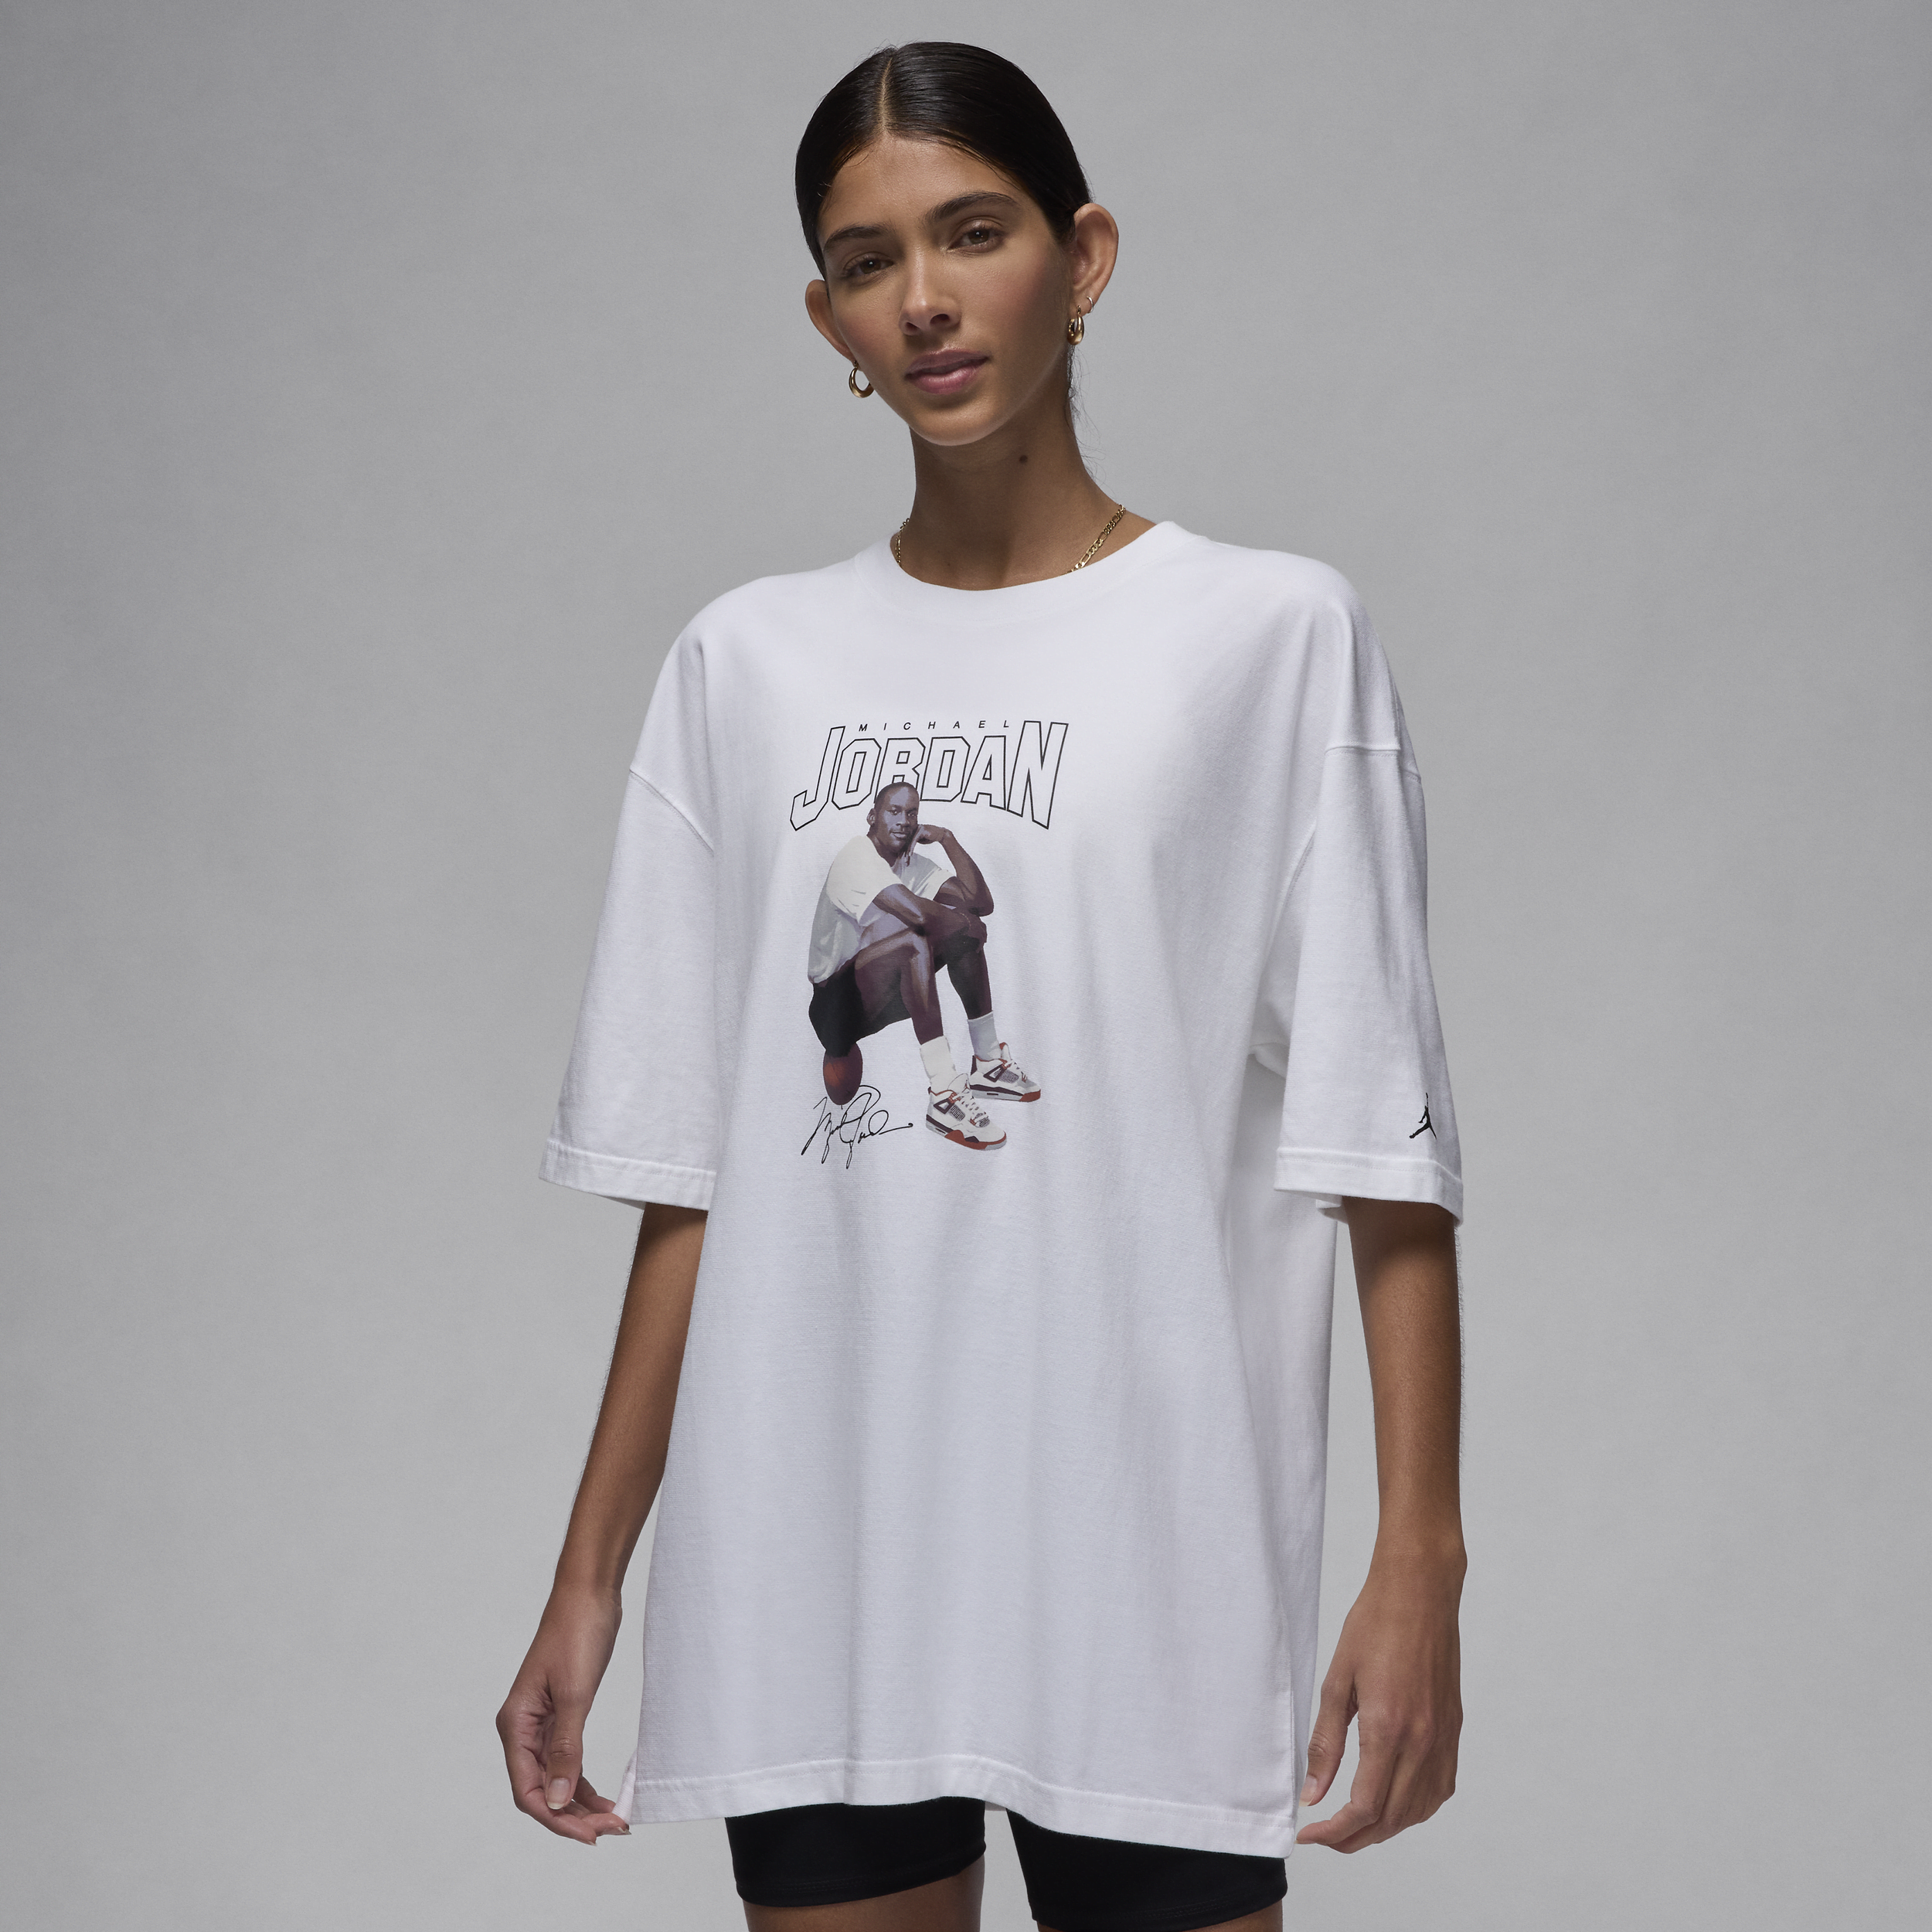 Nike T-shirt oversize con grafica Jordan – Donna - Bianco